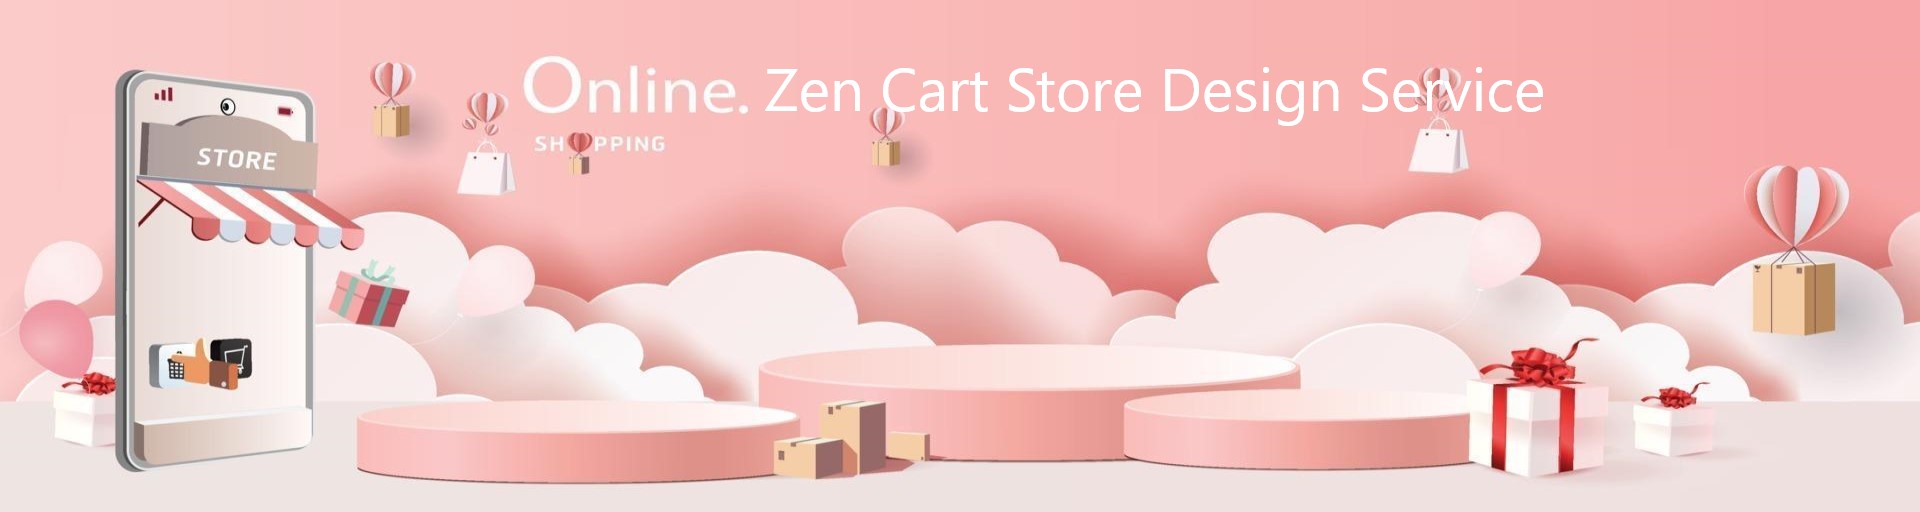 Zen Cart Store Design Service